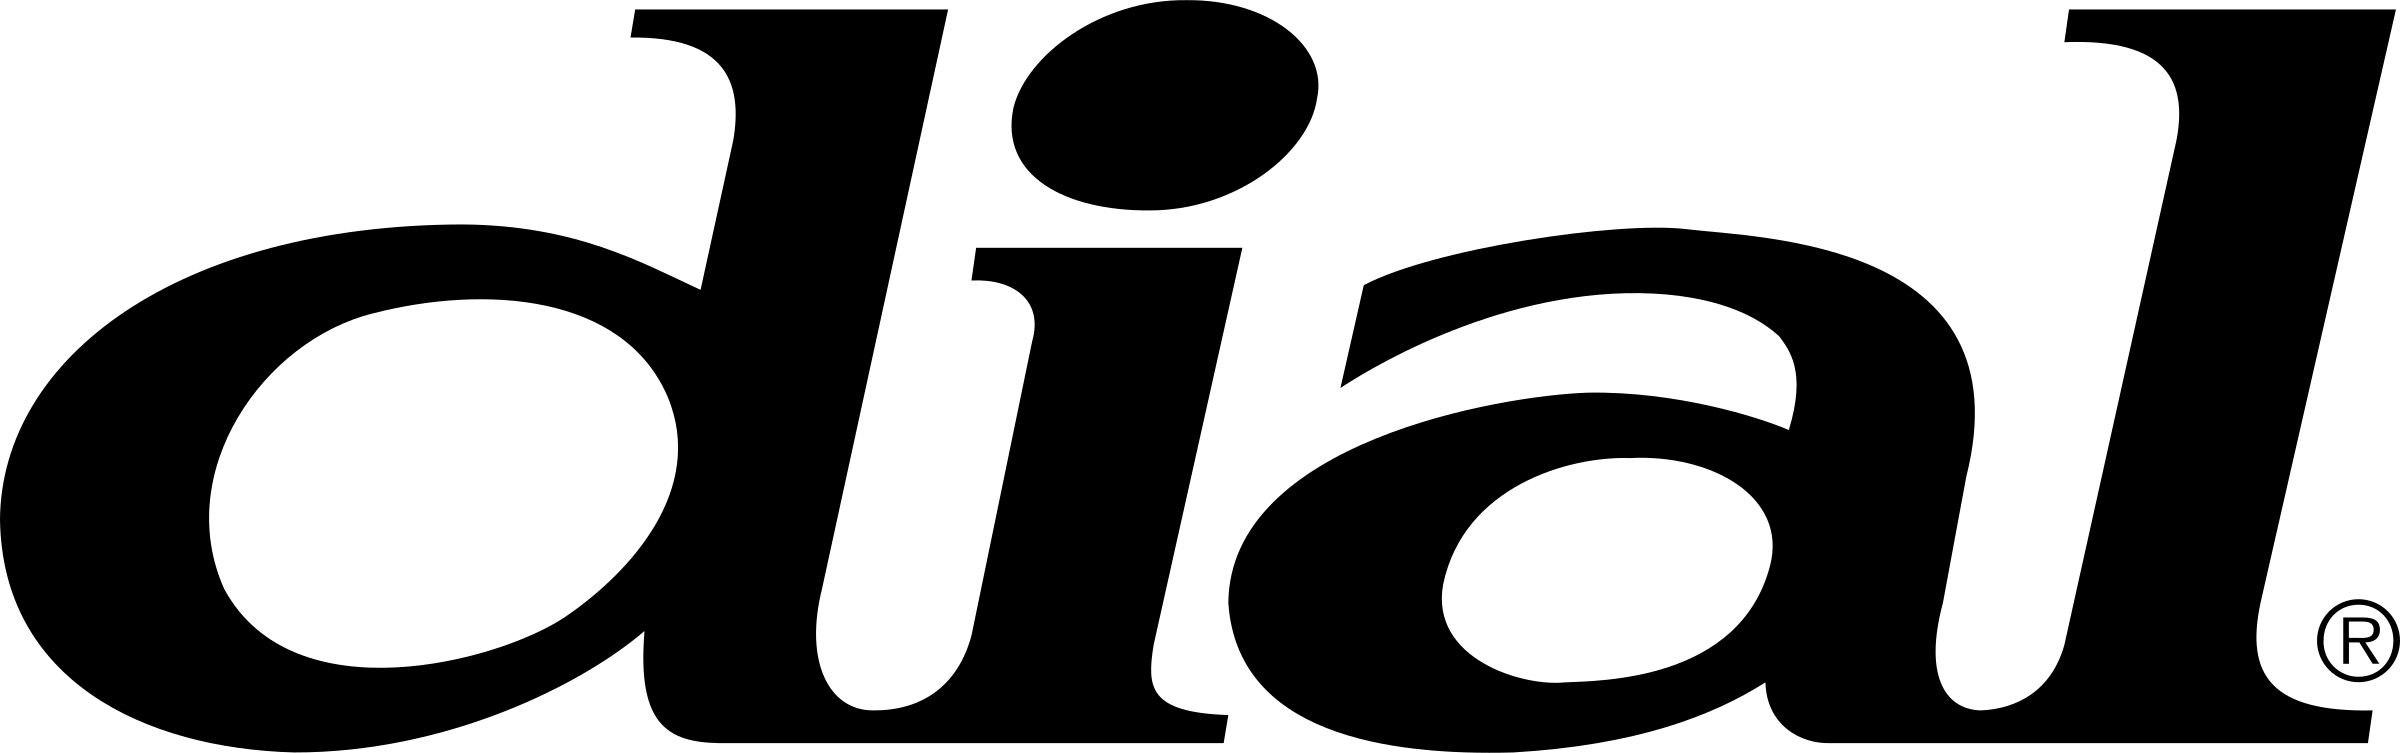 Dial Soap Logo Black And White - Dial Soap Logo (2400x753)